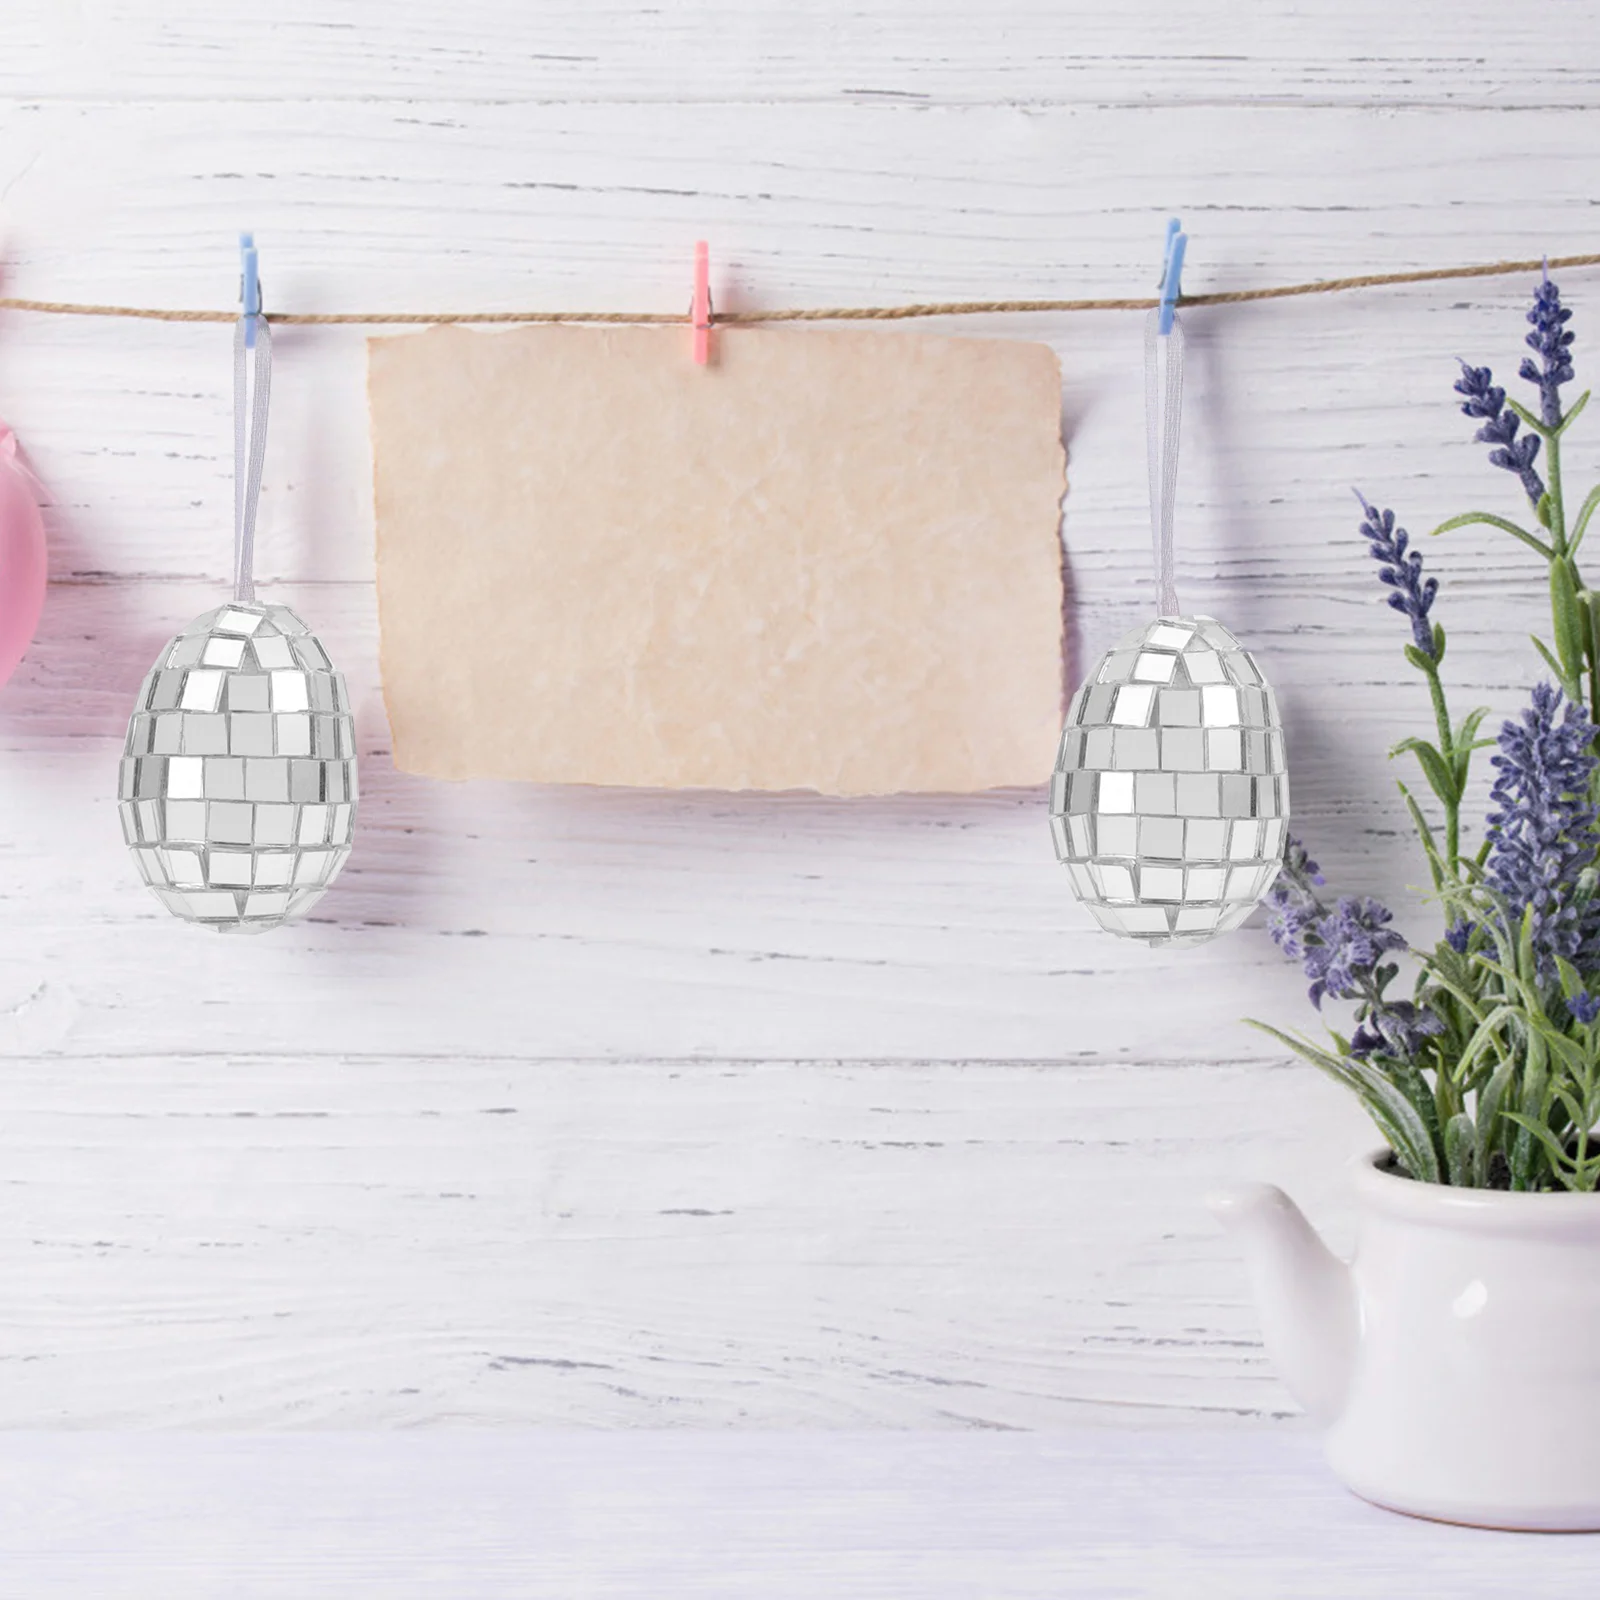 12 Pcs Mirror Easter Egg Party Layout Balls Shape Decor Glass Ornaments Egg-shaped